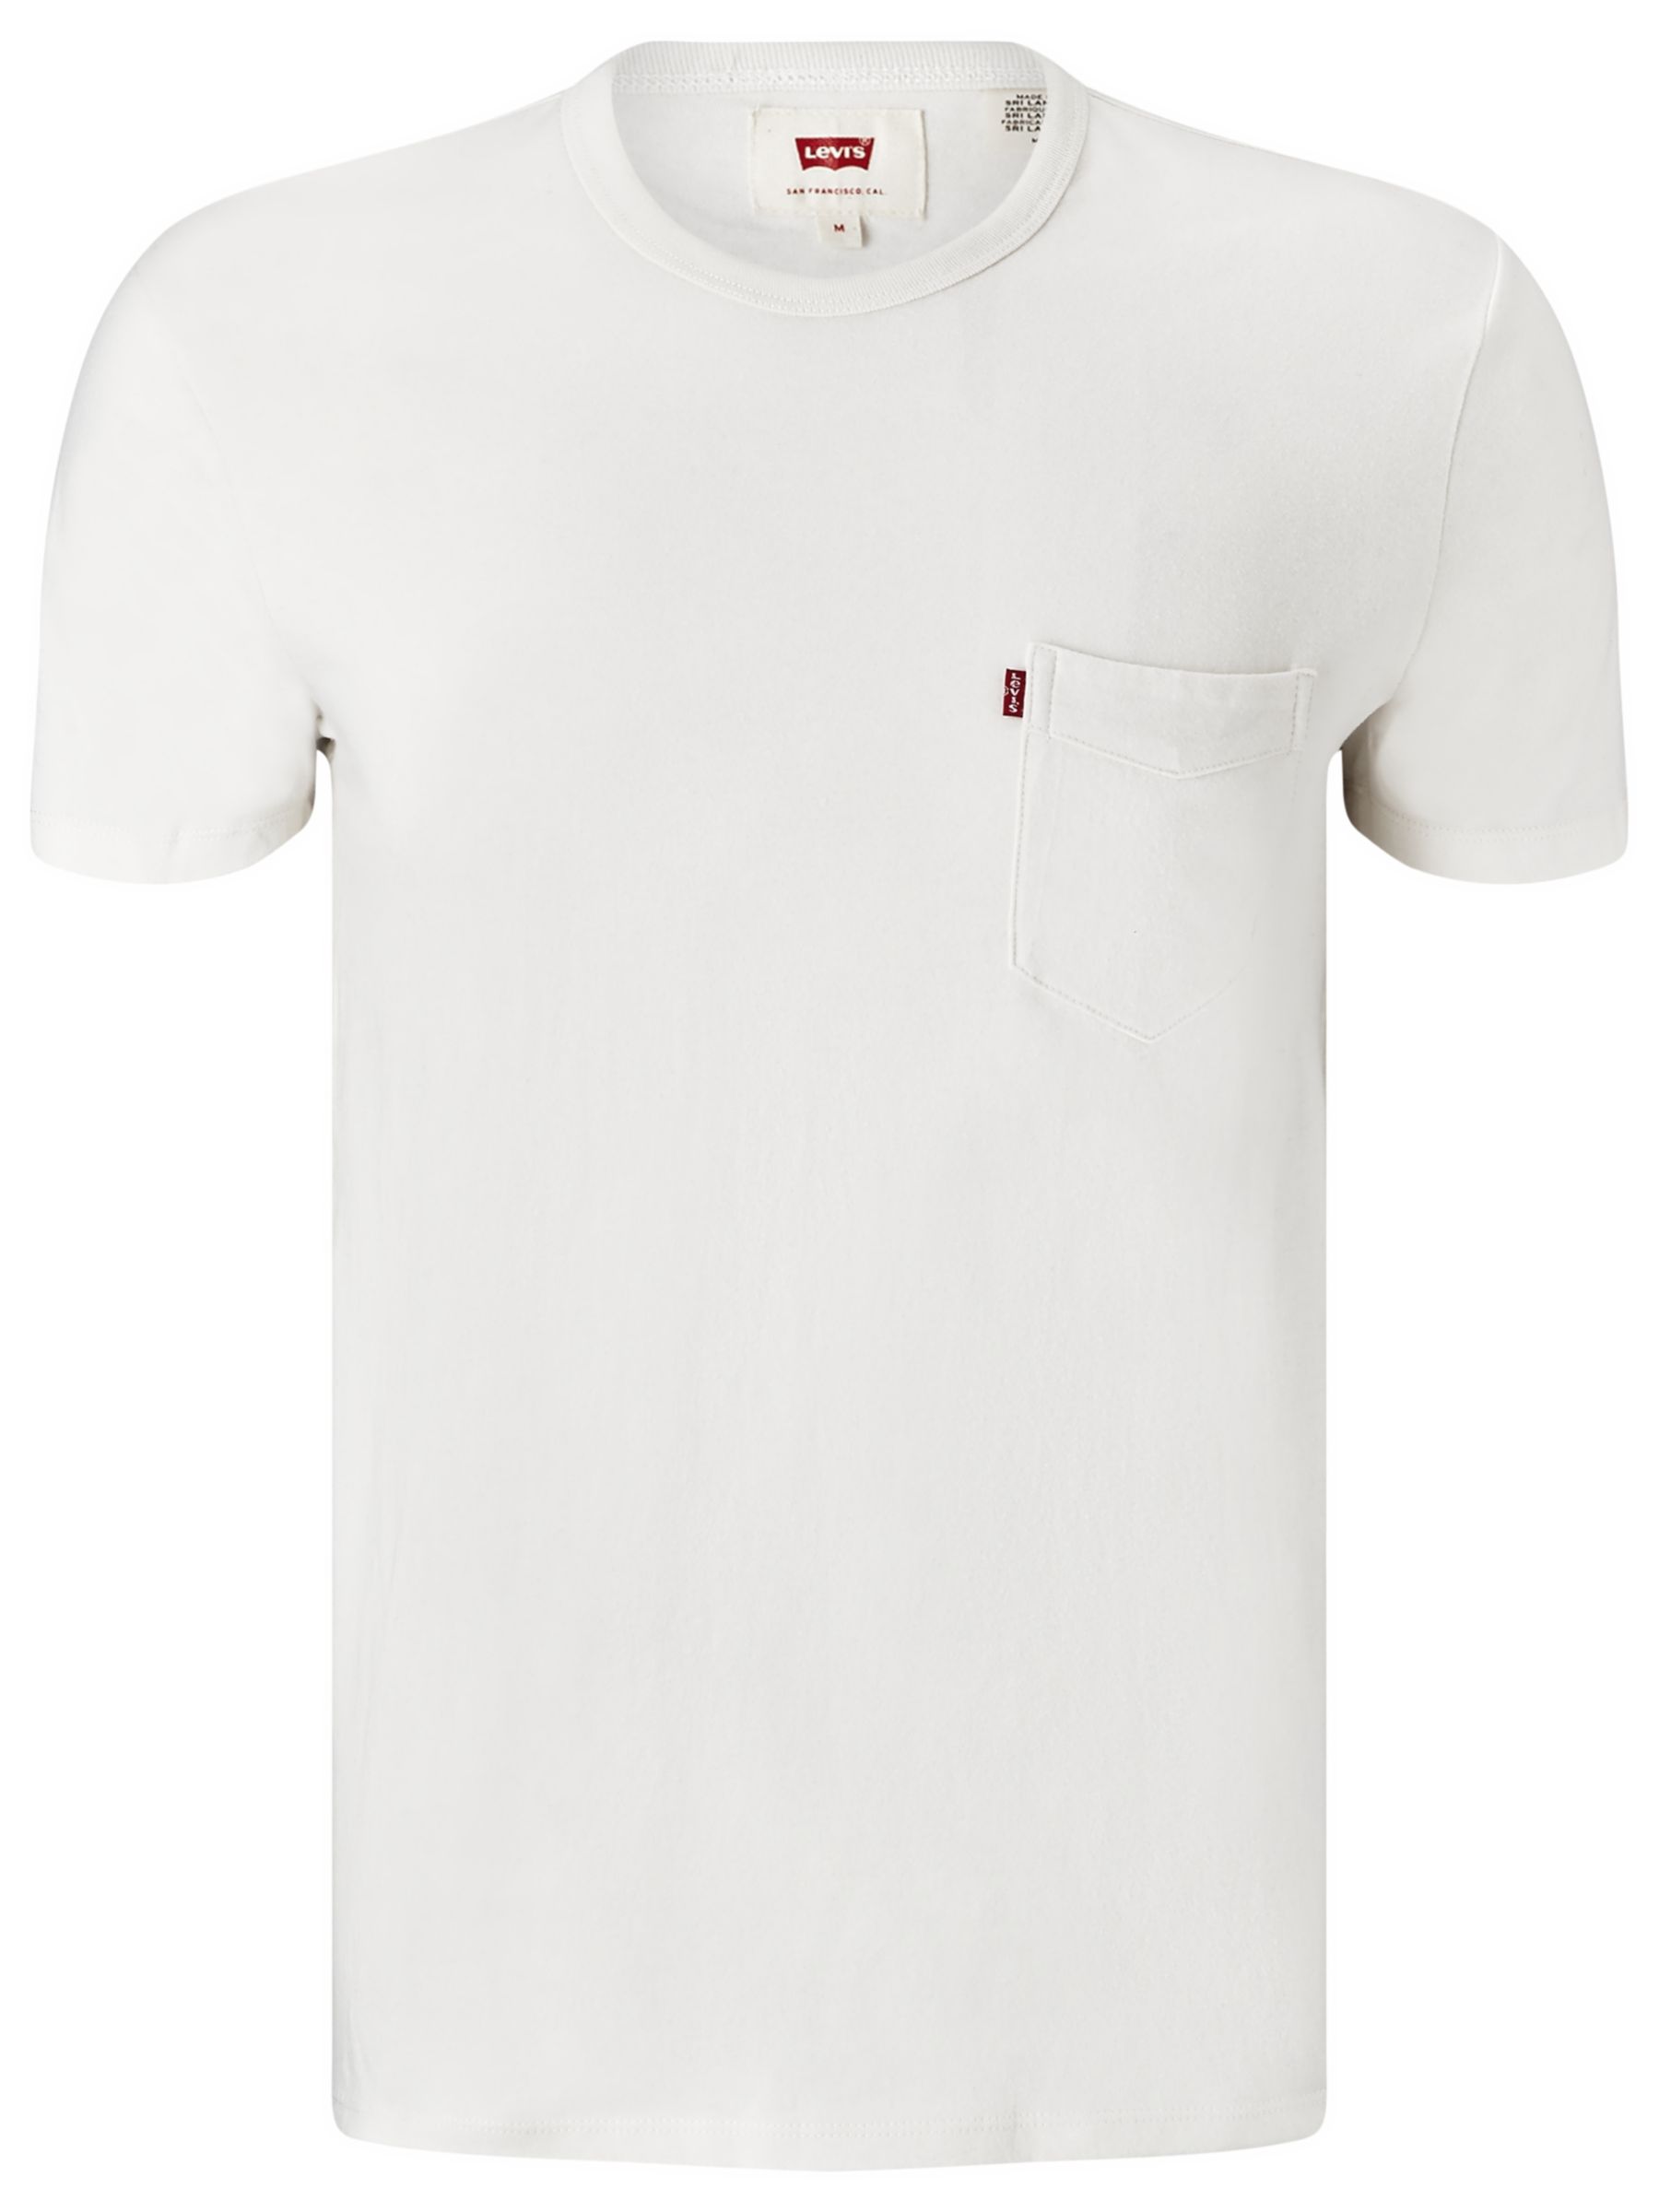 Levi's One Pocket Short Sleeve T-Shirt 